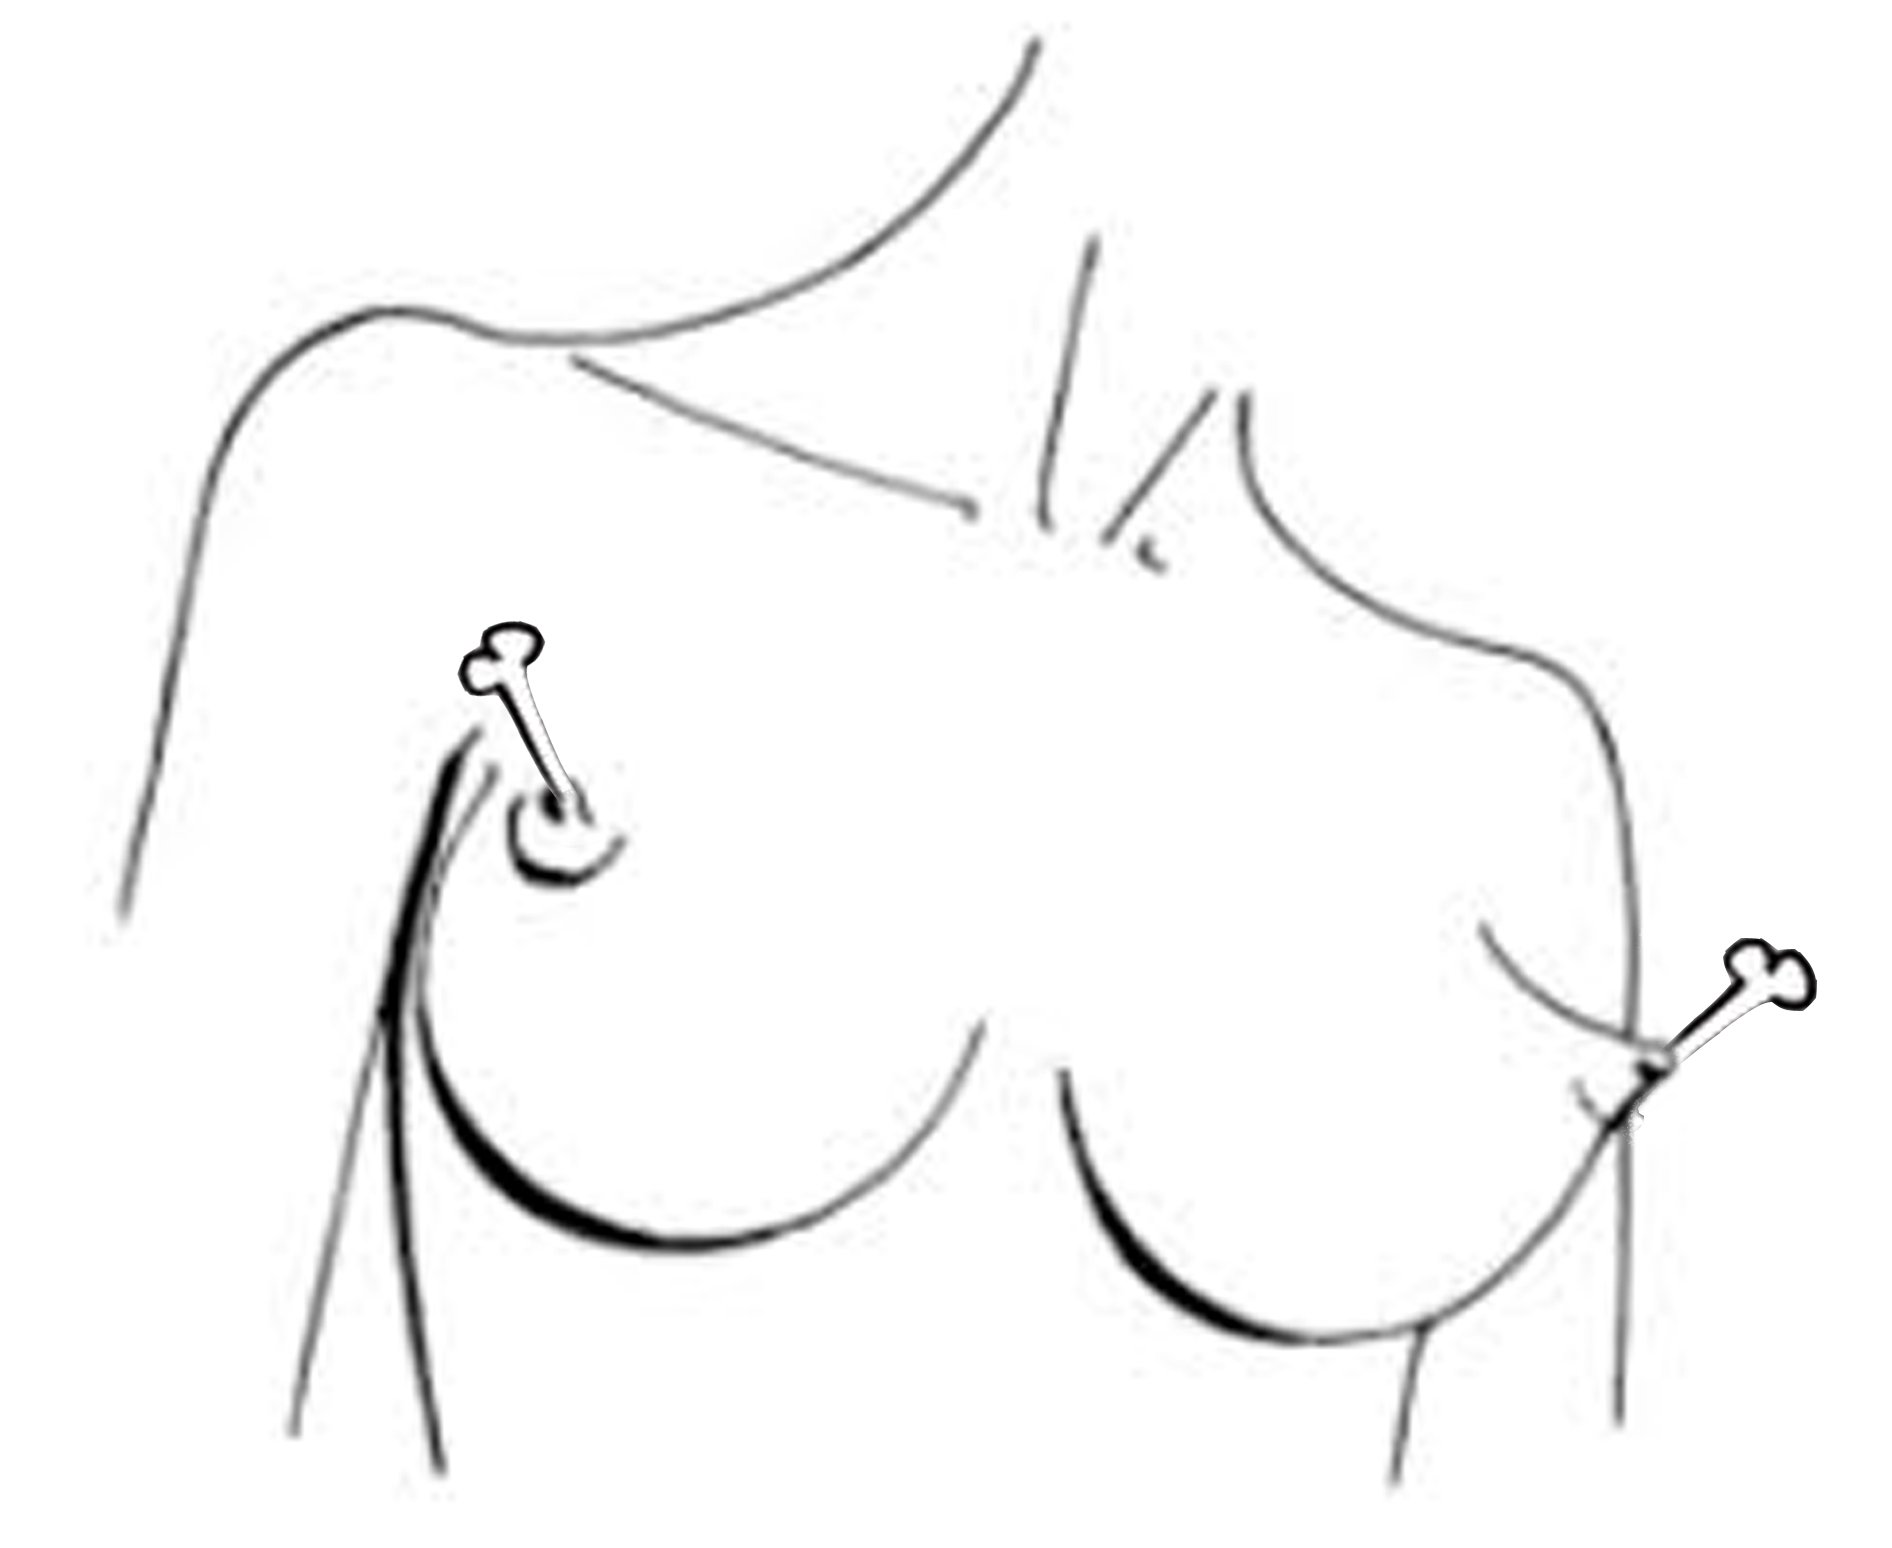 форма груди у русских женщин фото 46